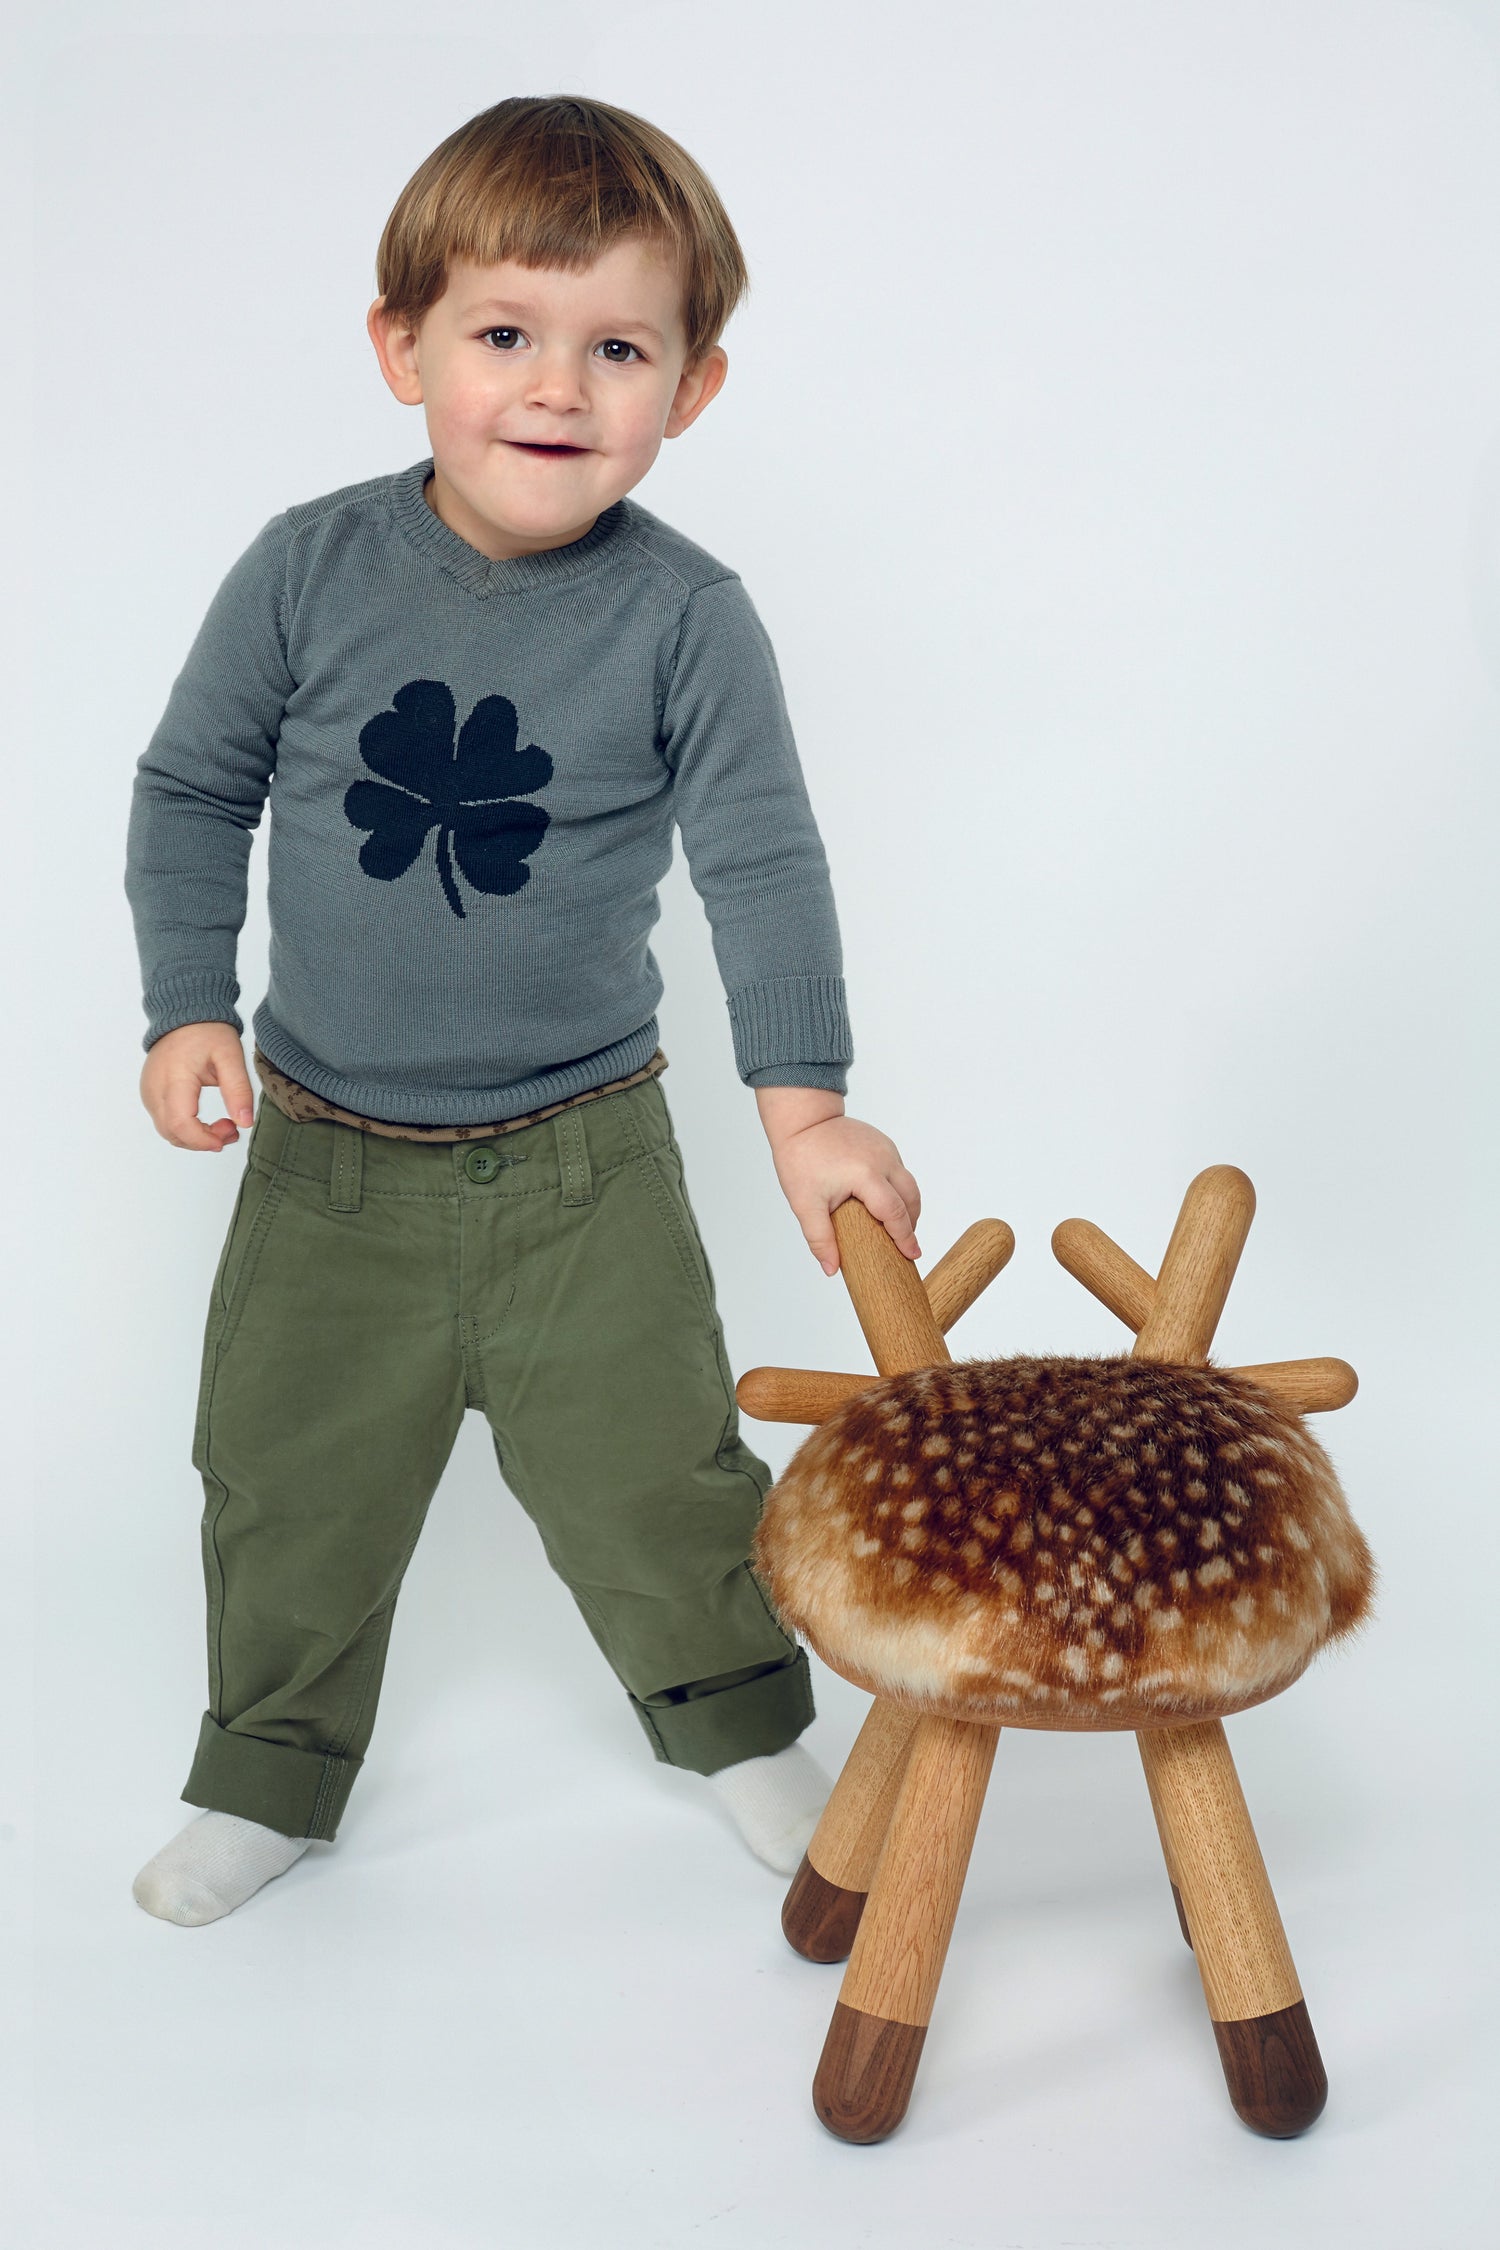 Bambi Chair Kids Chairs EO 